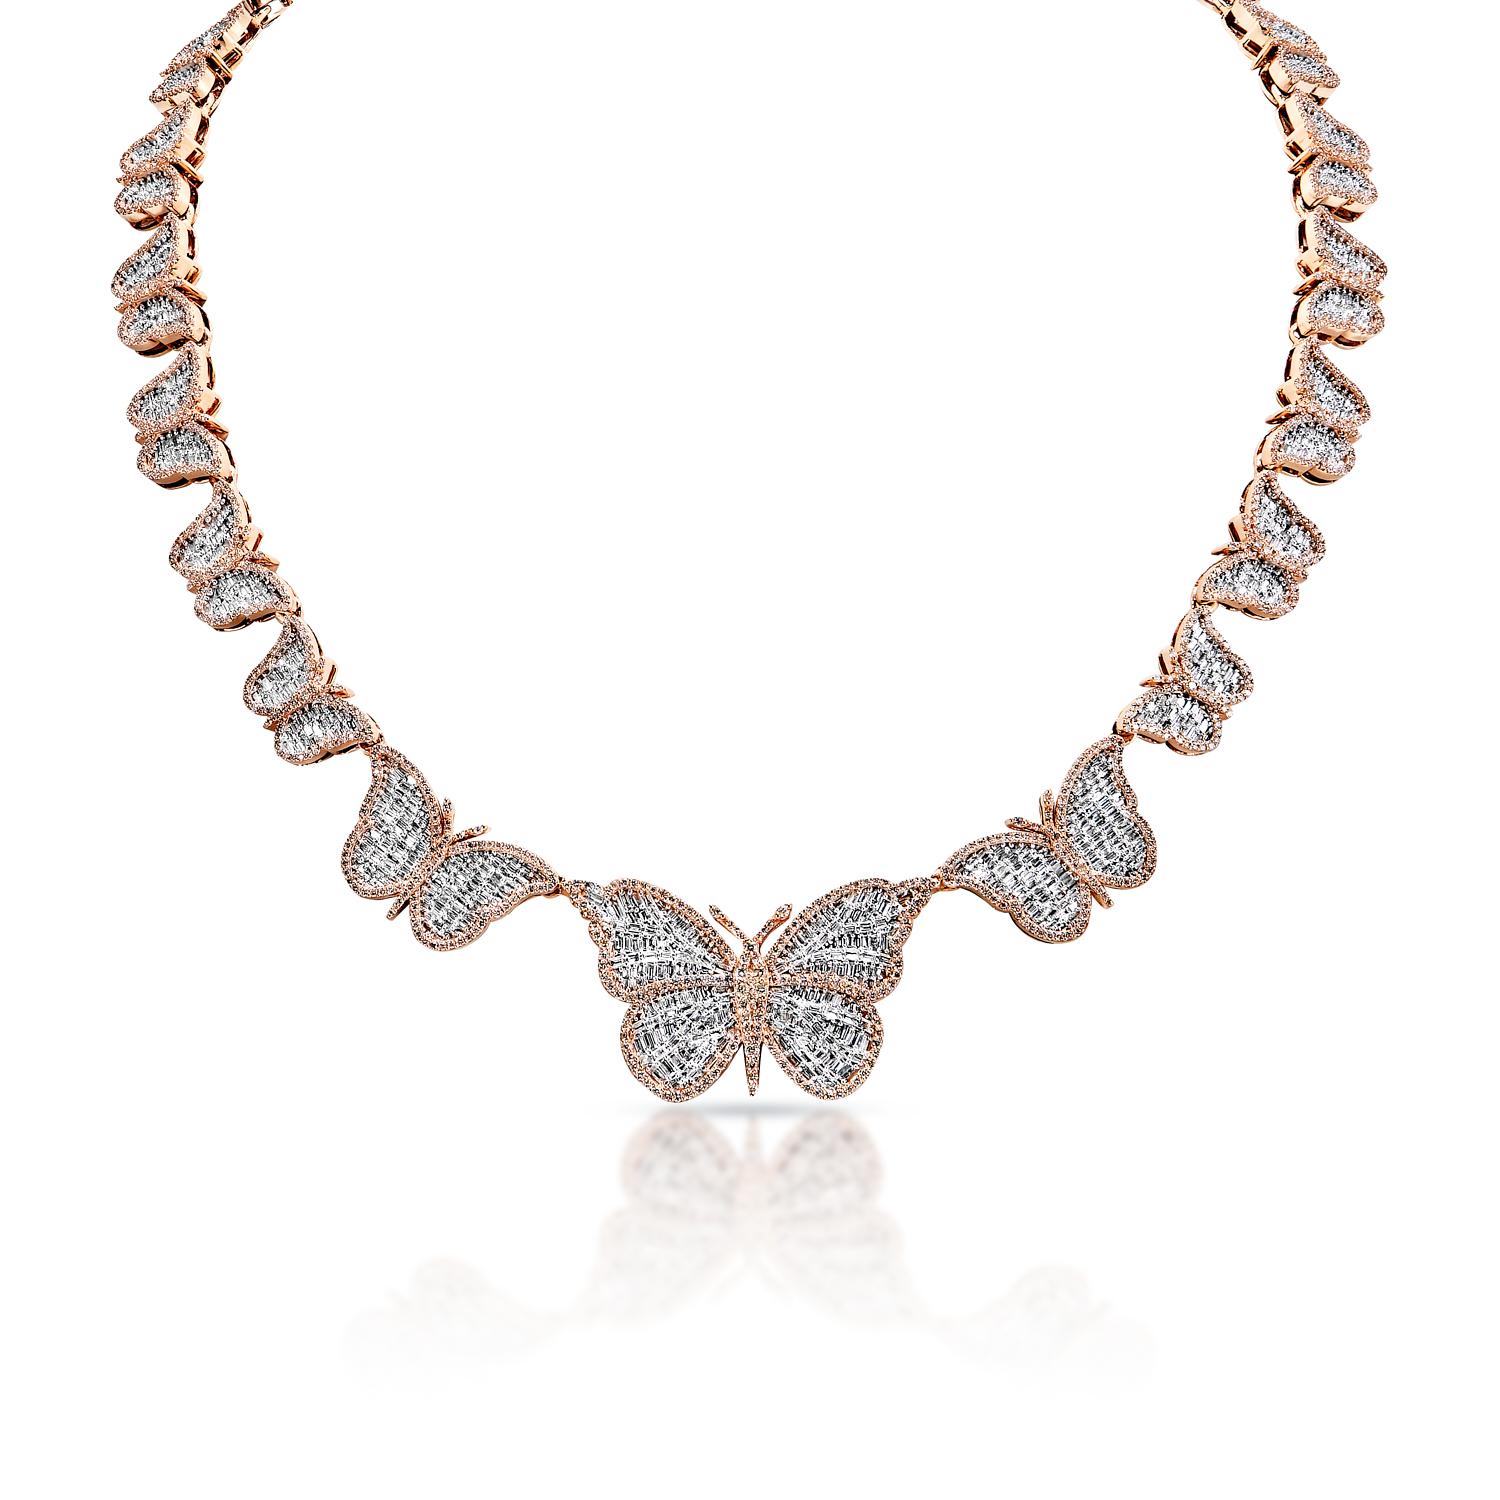 Diamond Necklace:

Carat Weight: 13.06 Carats
Style: Combine Mix Shape
Chains: 14 Karat Rose Gold
Setting: Pave